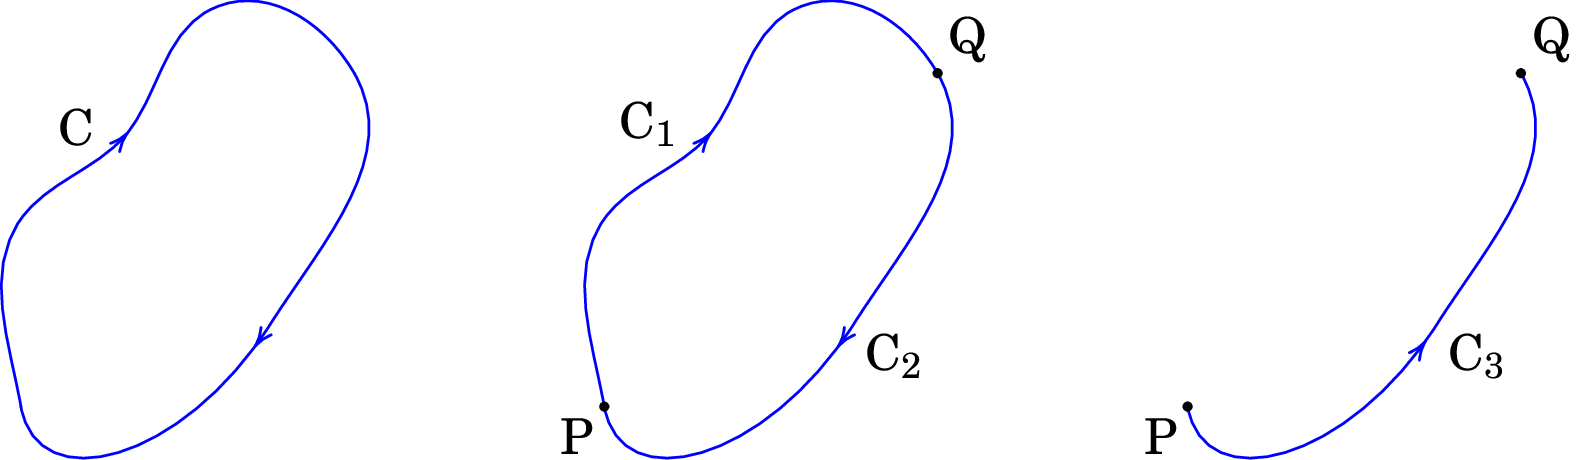 Curva fechada C dividida em duas curvas 